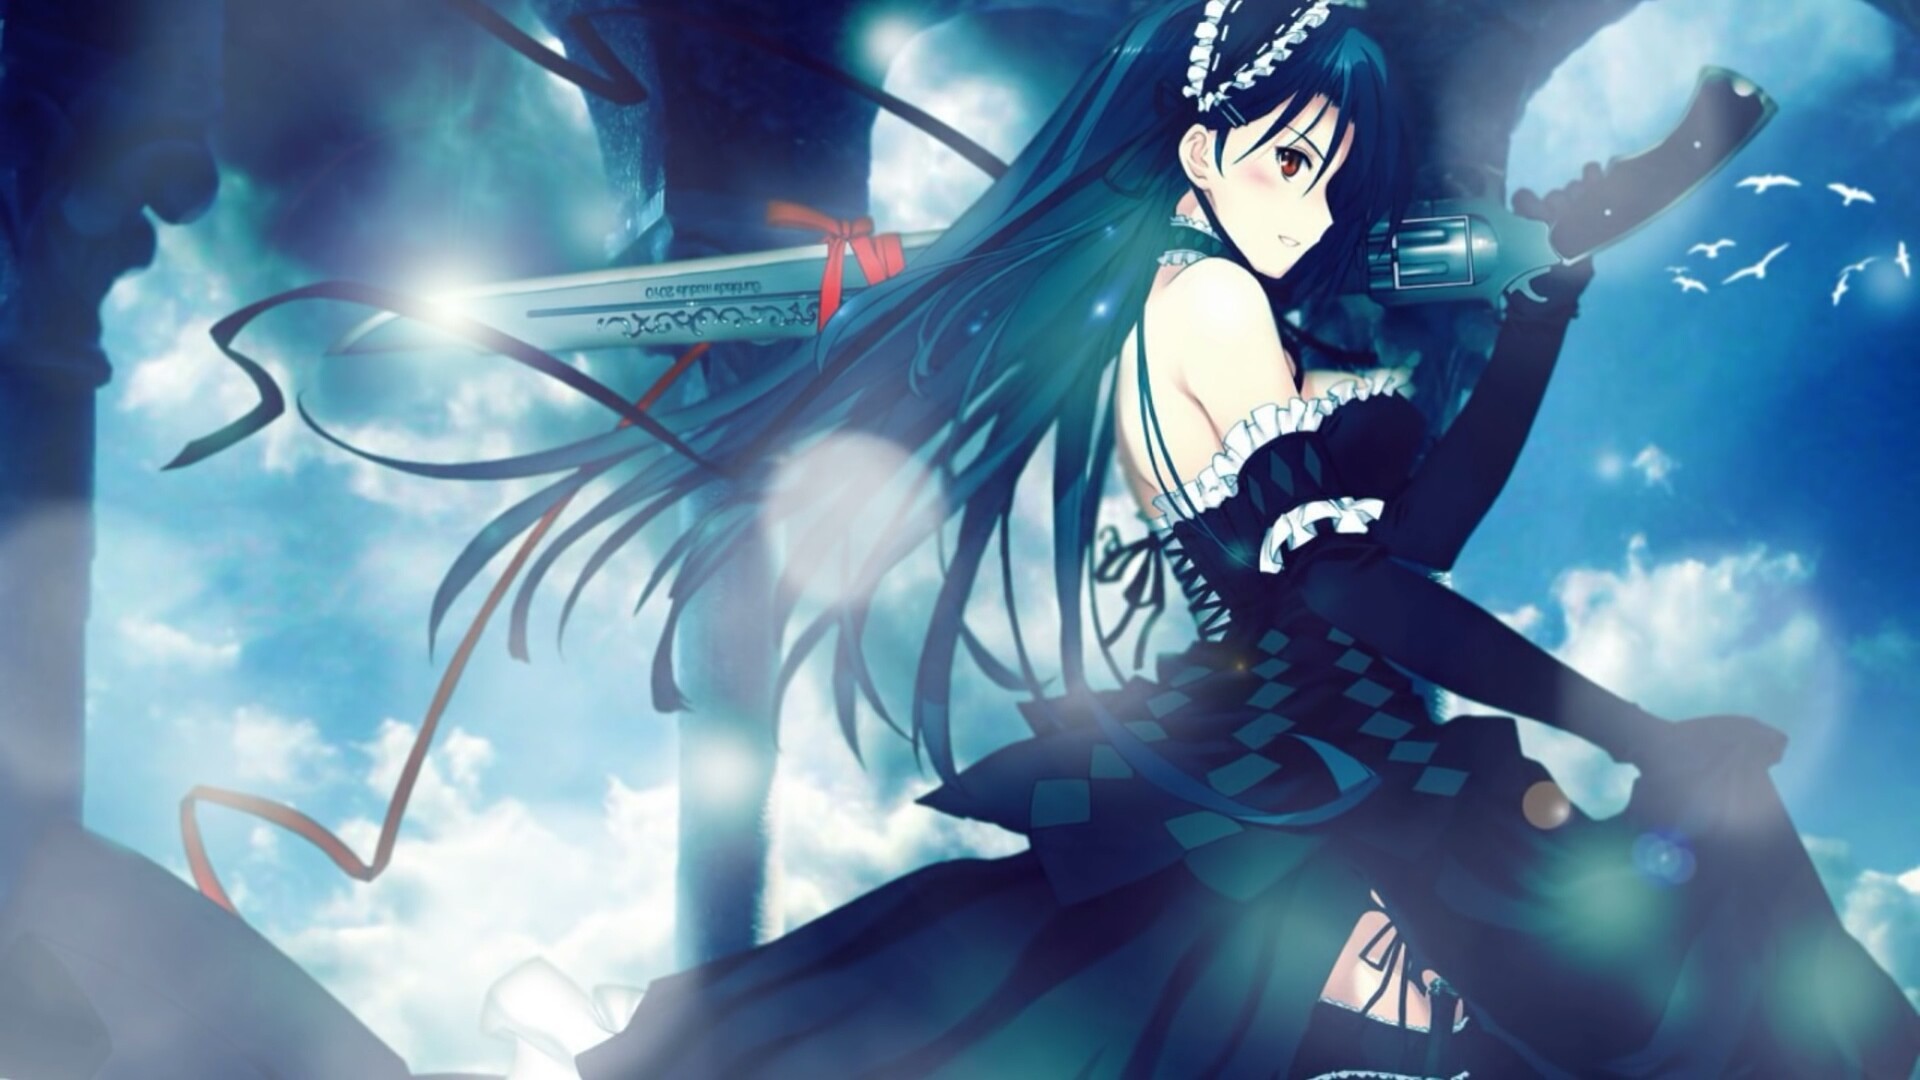 1920x1080, Anime Girl With Big Gun Wallpaper - Anime Girl With Sword And Black Hair - HD Wallpaper 